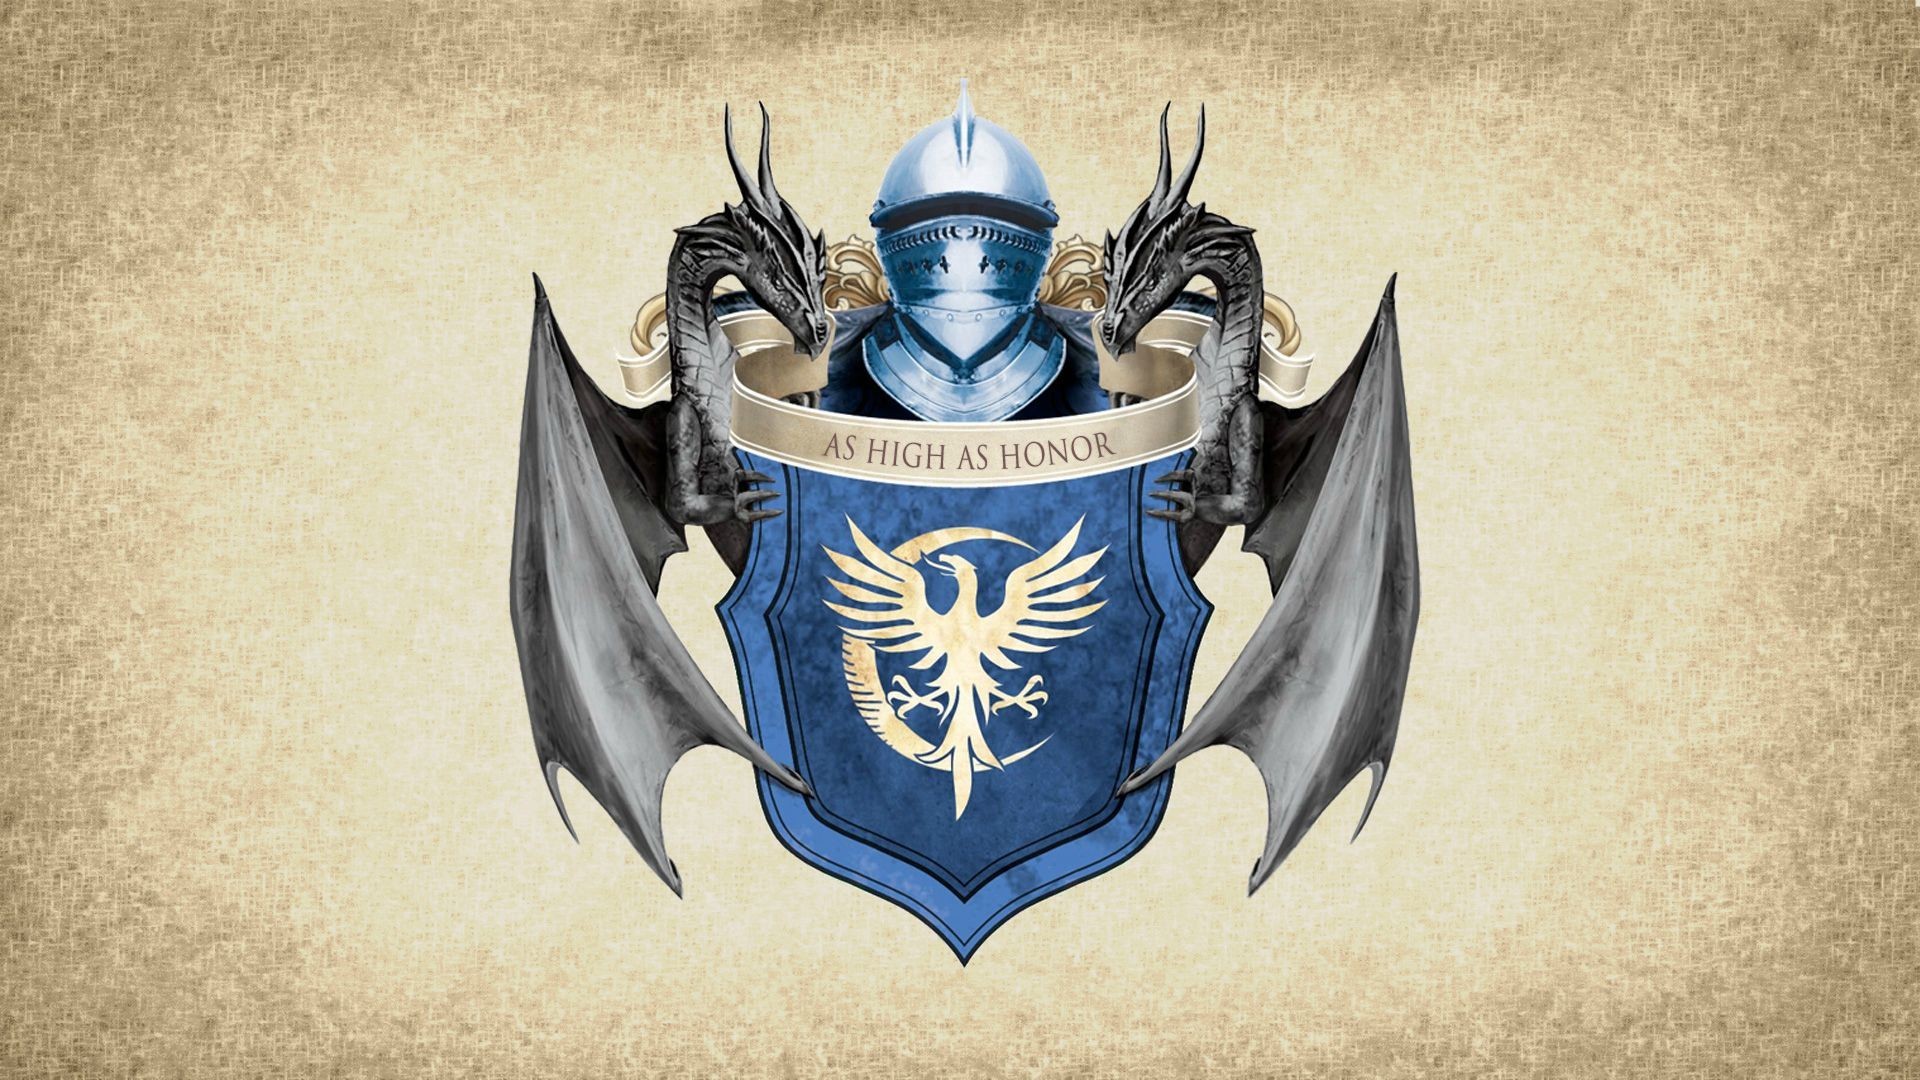 General 1920x1080 coat of arms medieval House Arryn sigils crest Game of Thrones TV series digital art simple background